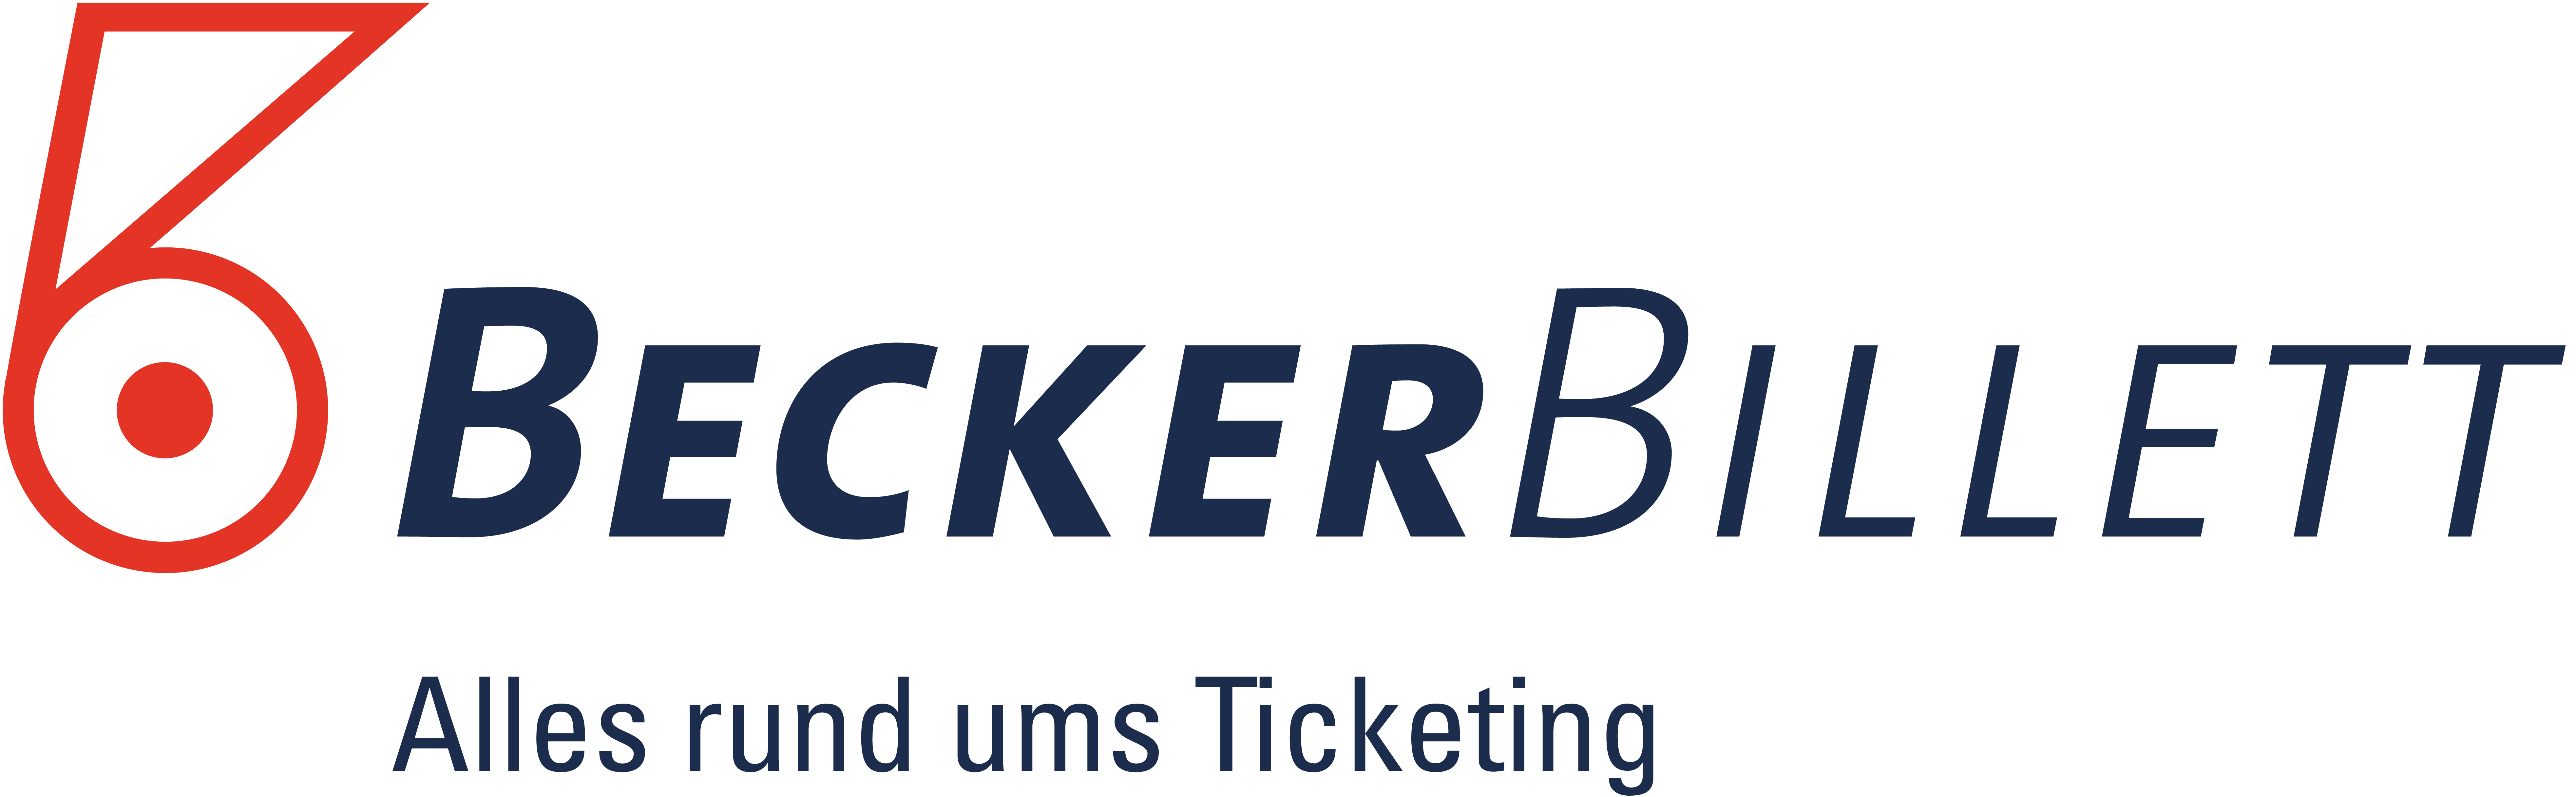 Beckerbillett GmbH